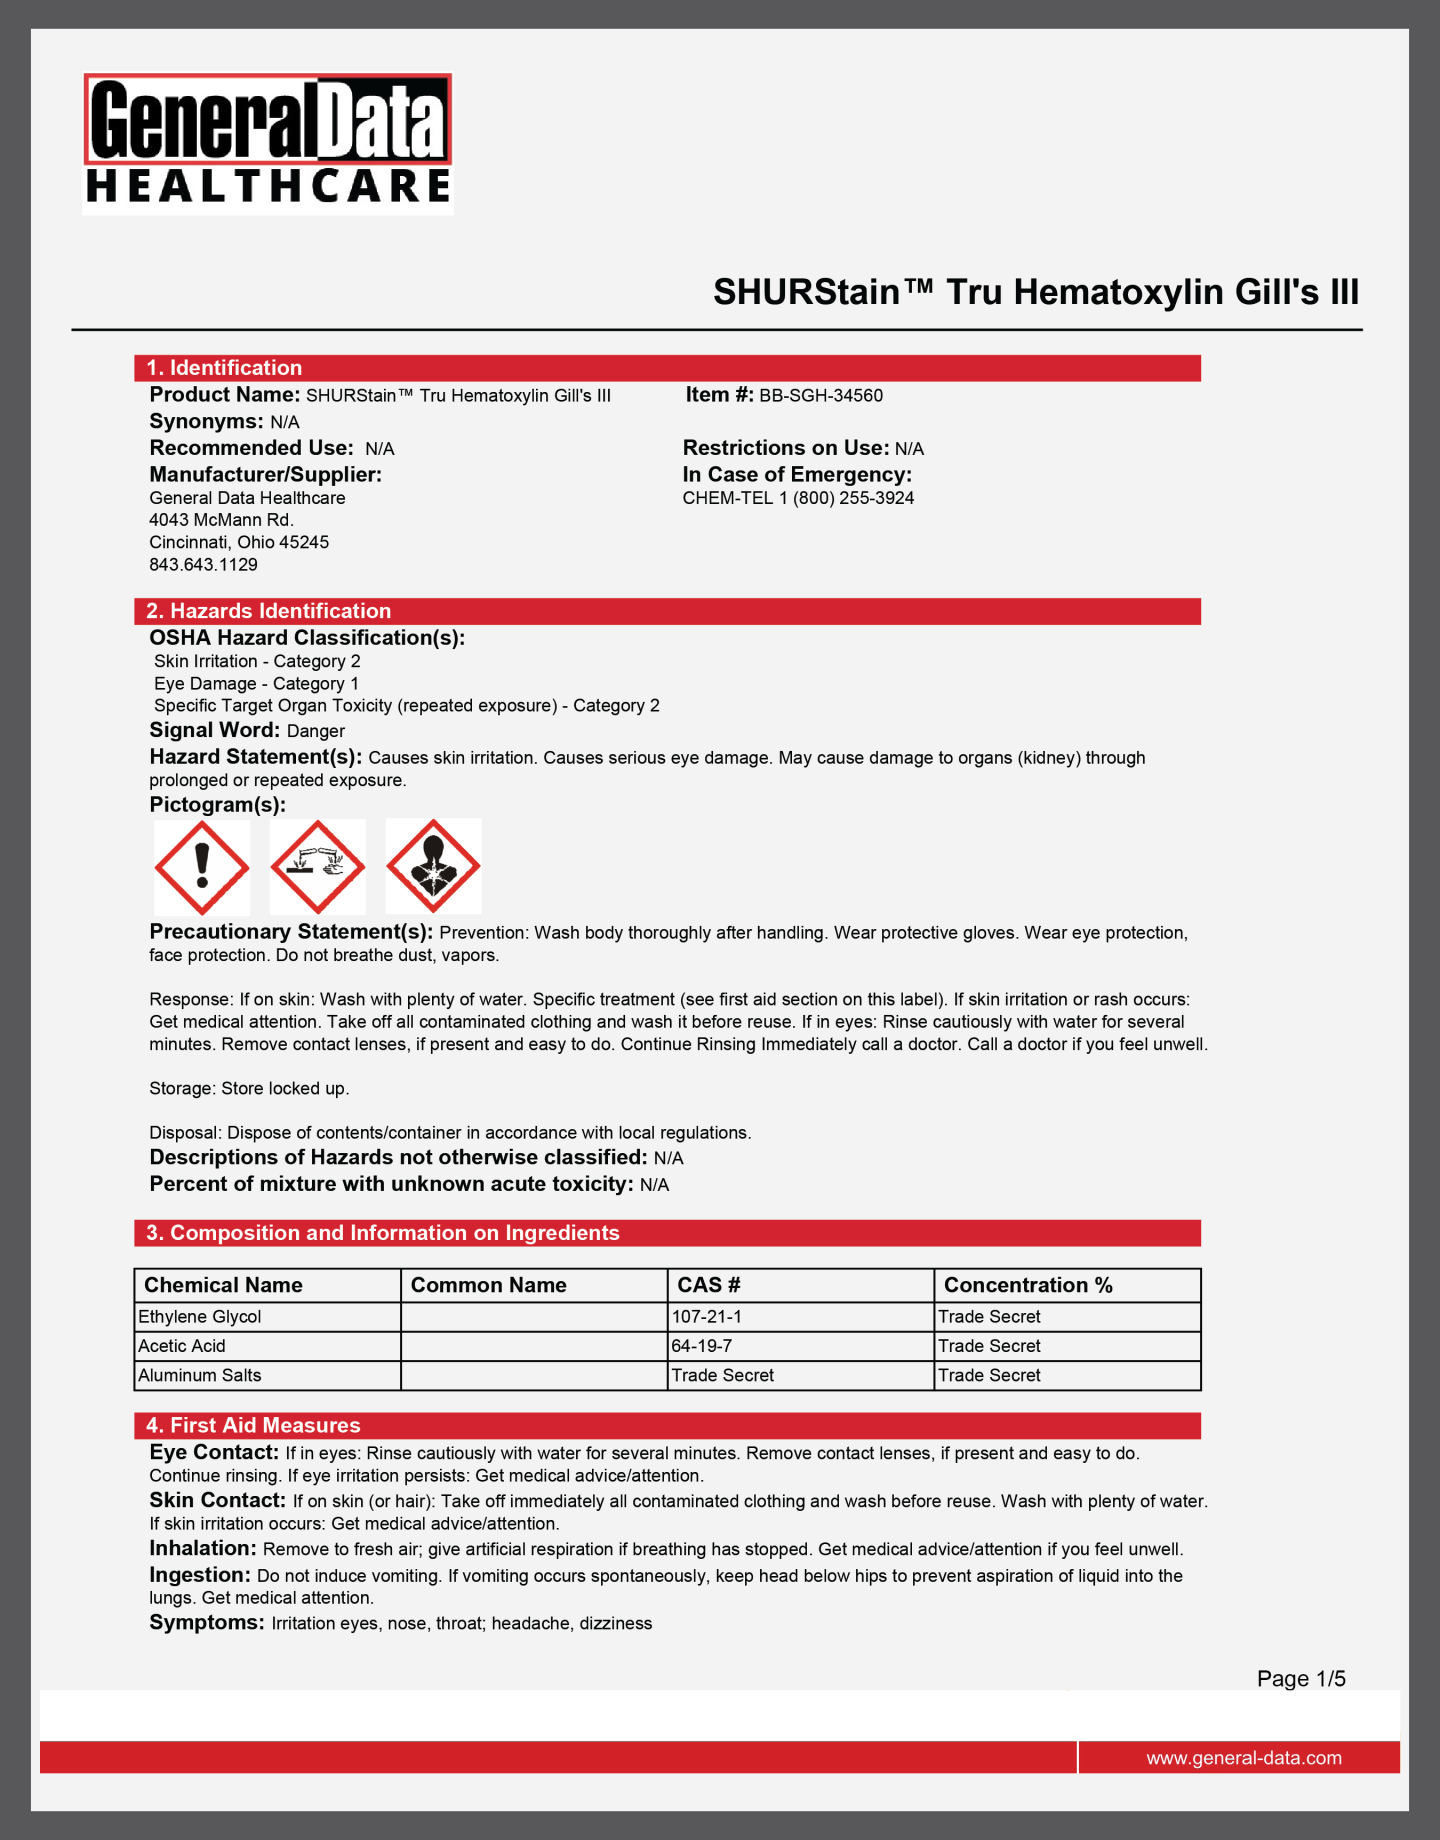 SHURStain Tru Hematoxylin Gill's III Safety Data Sheet